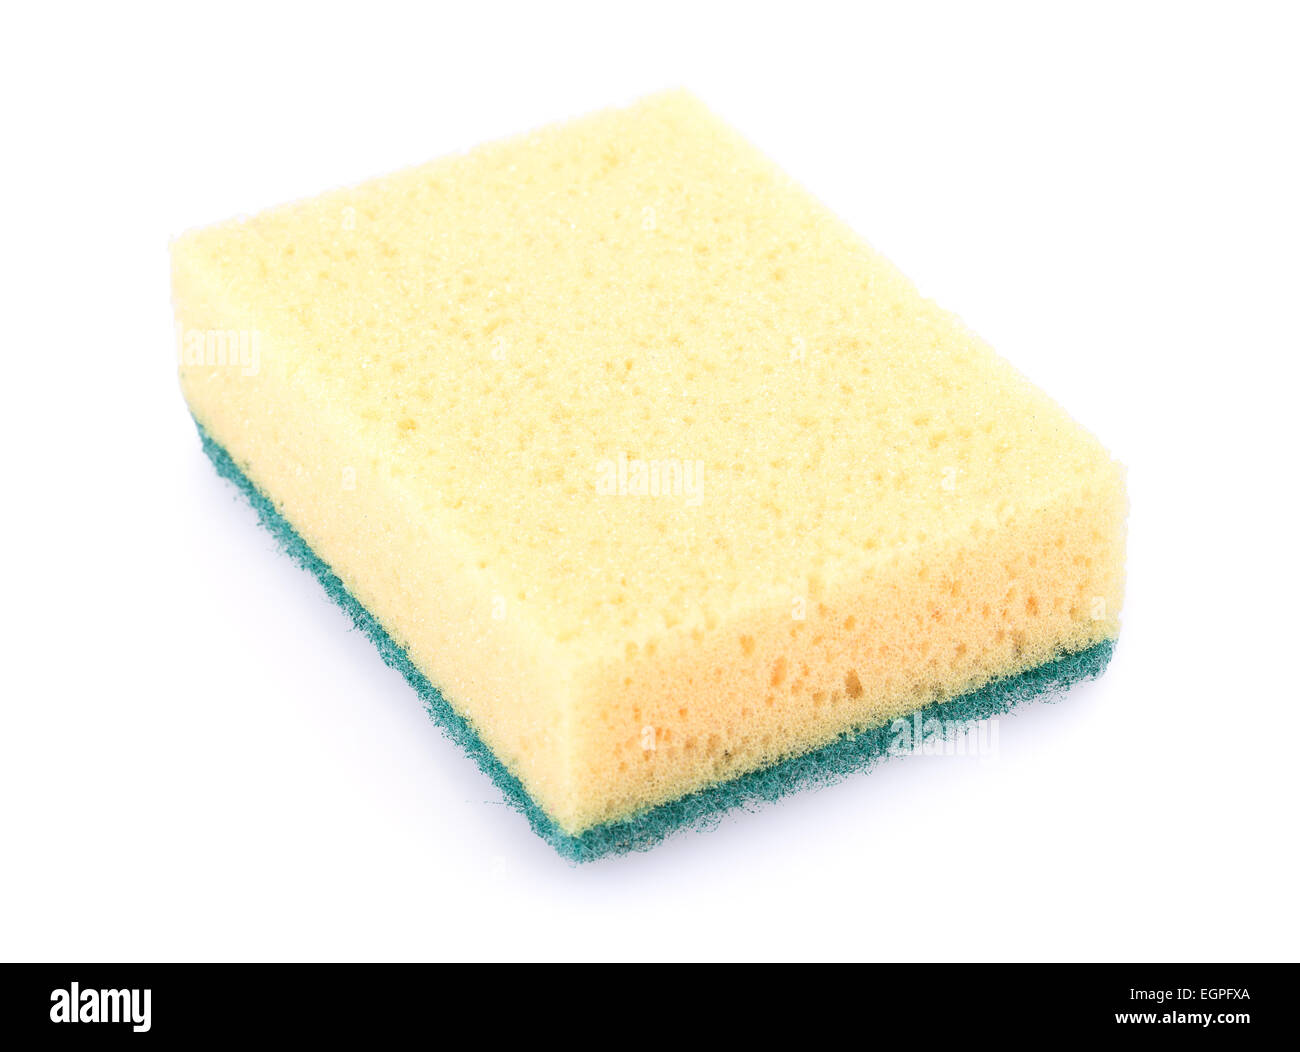 kitchen sponges isolated on white background Stock Photo